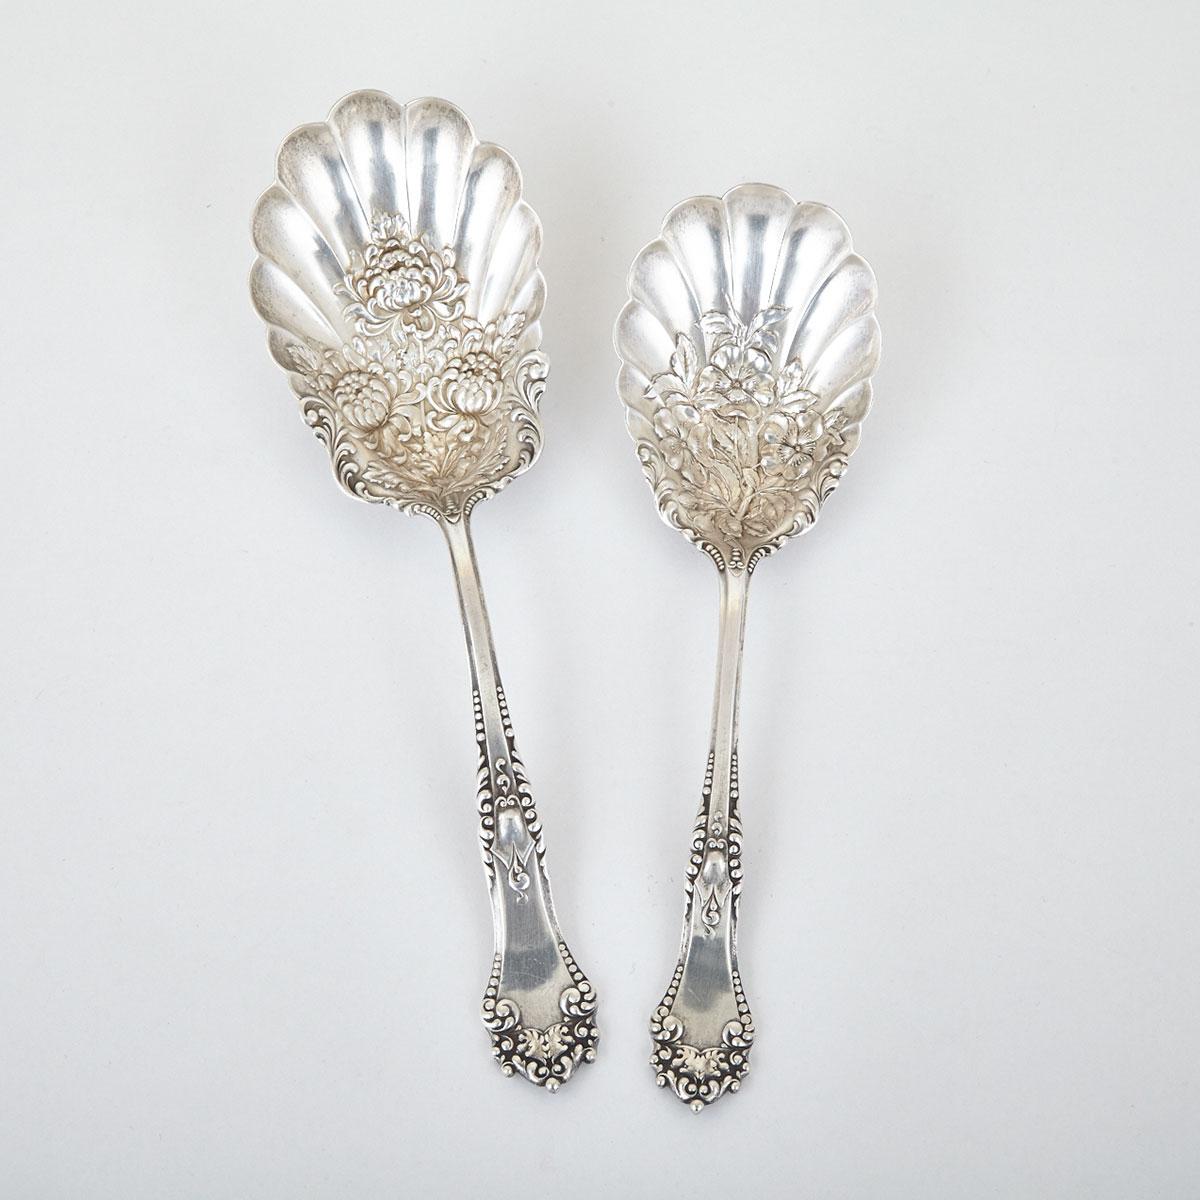 Two American Silver ‘La Touraine’ Pattern Berry Spoons, Reed & Barton, Taunton, Mass., c.1900